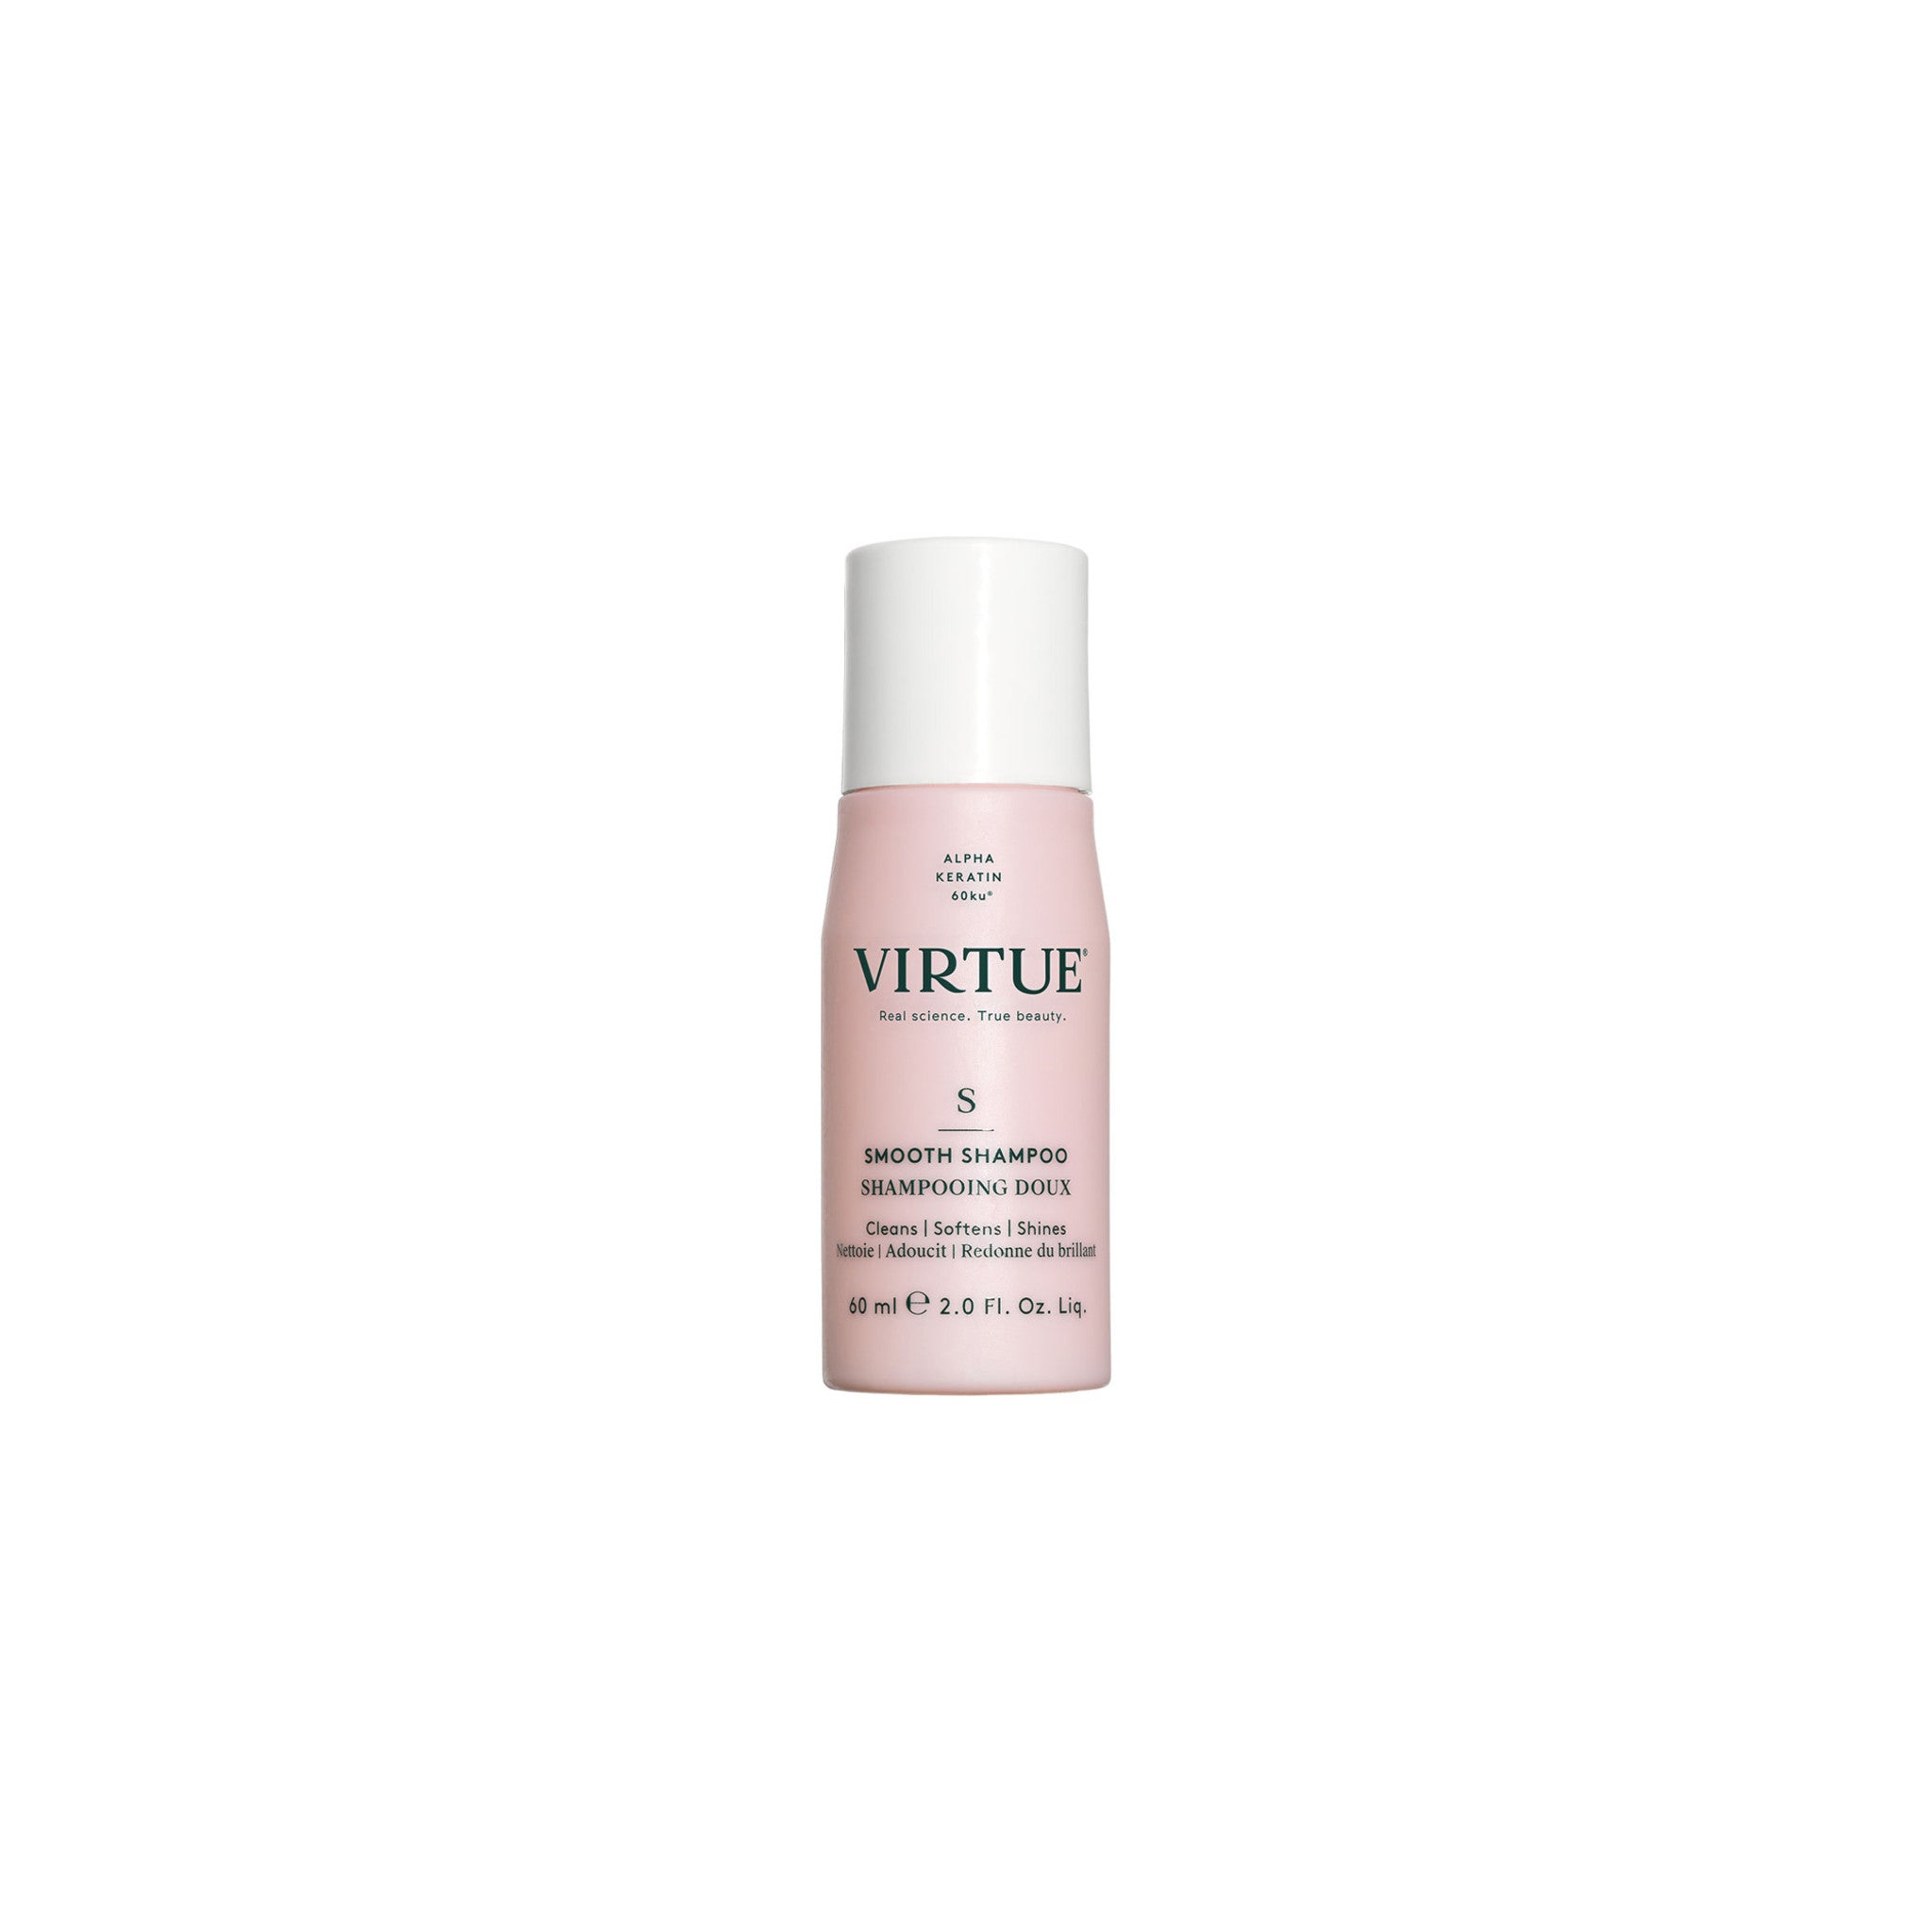 Virtue Smooth Shampoo Size variant: 2 oz | 60 ml main image.